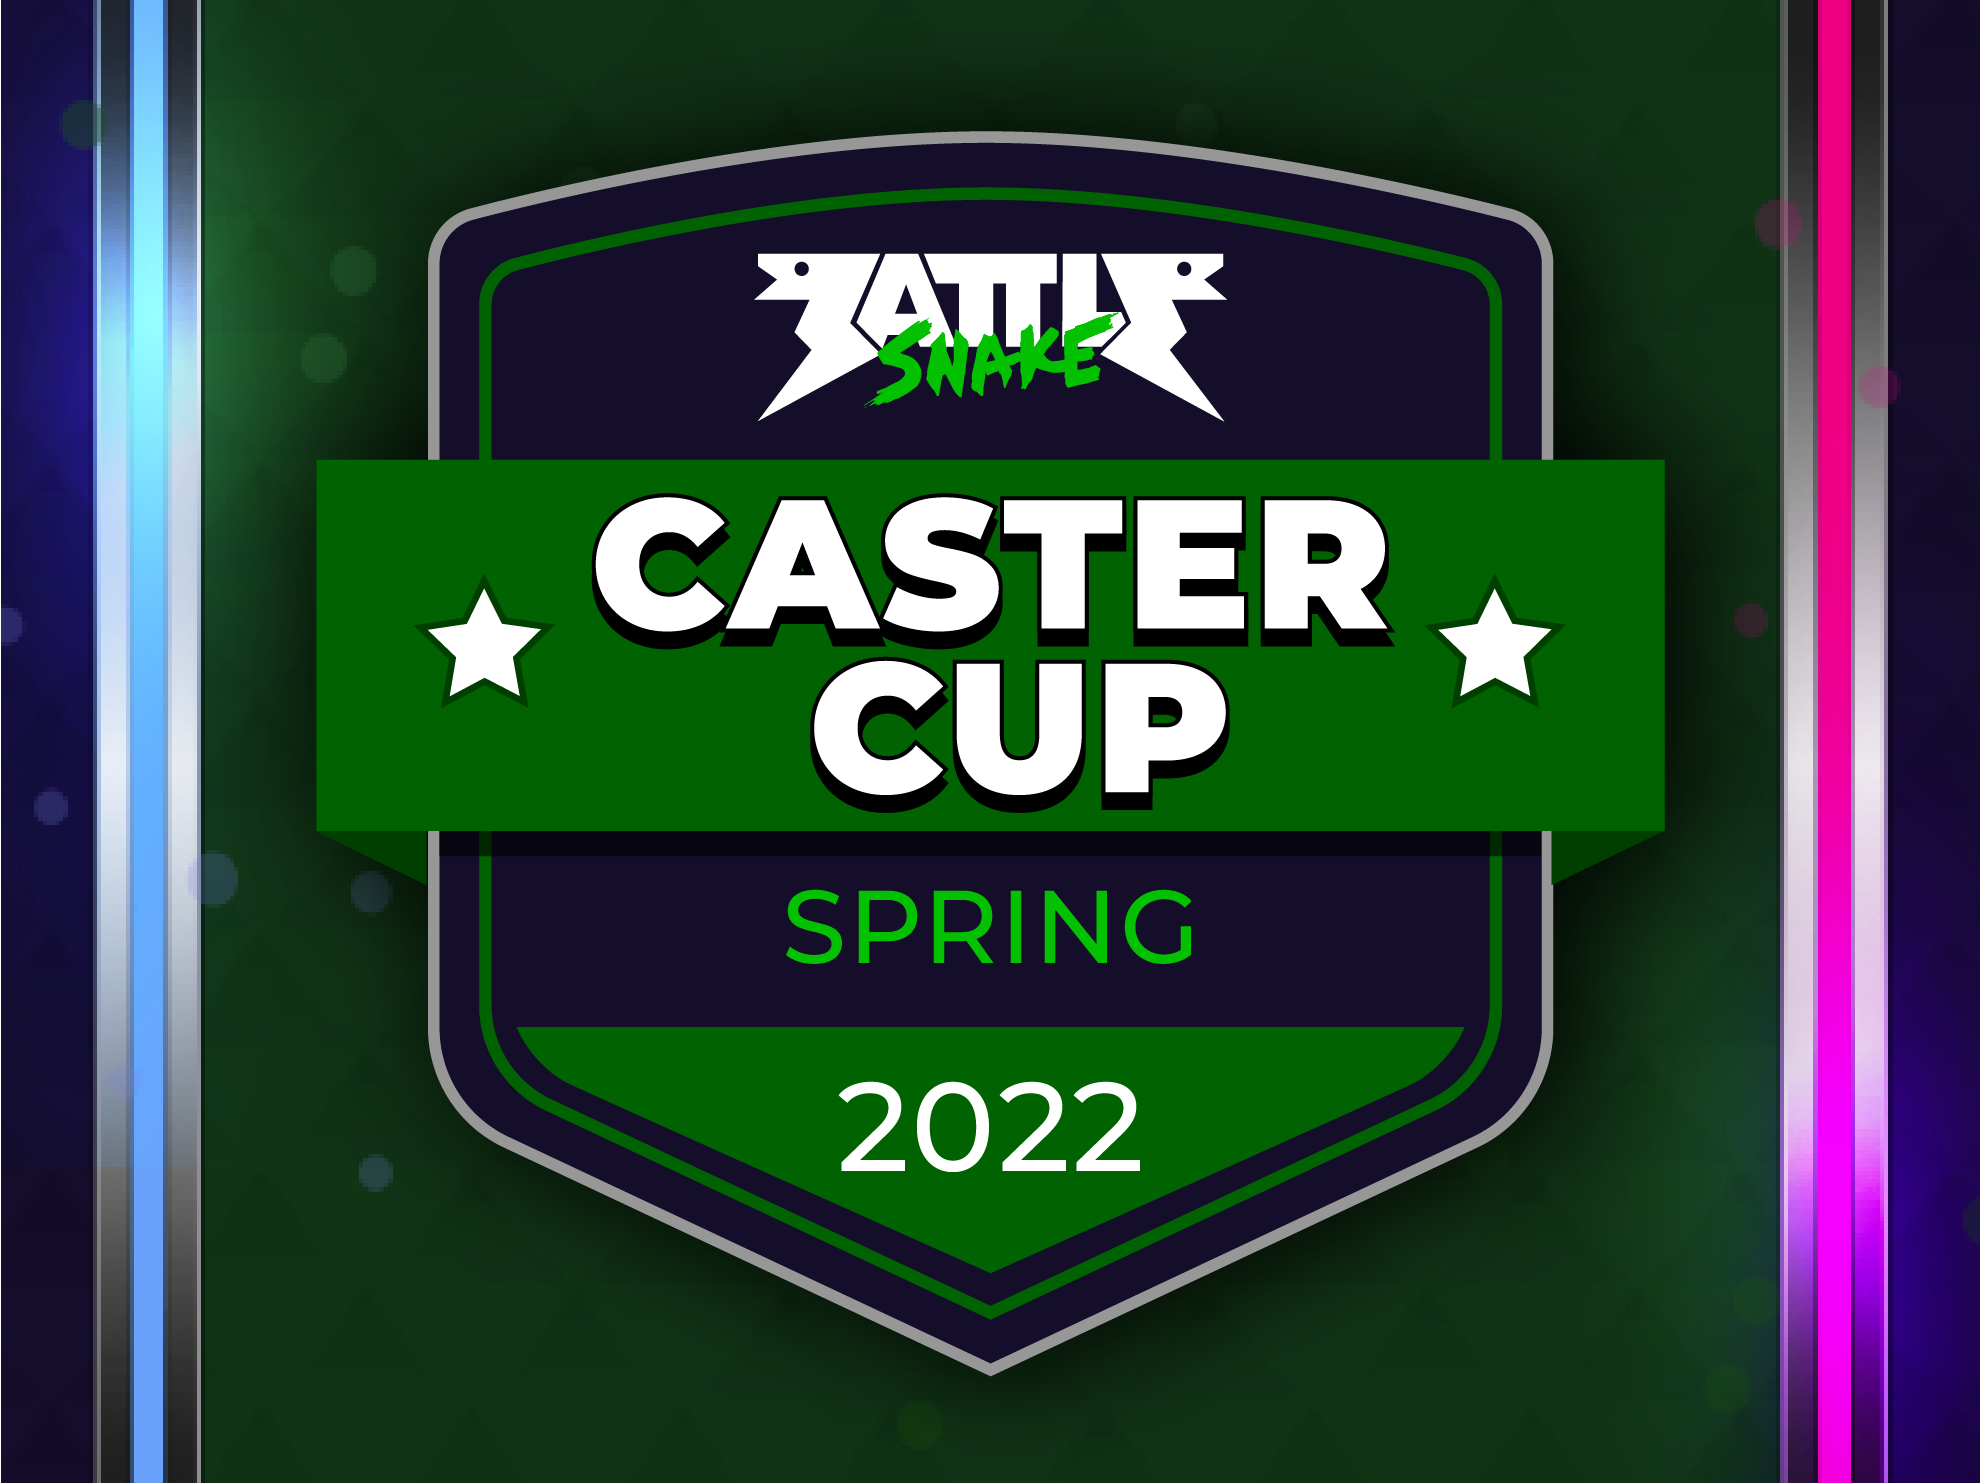 Caster Cup Spring 2022 logo card